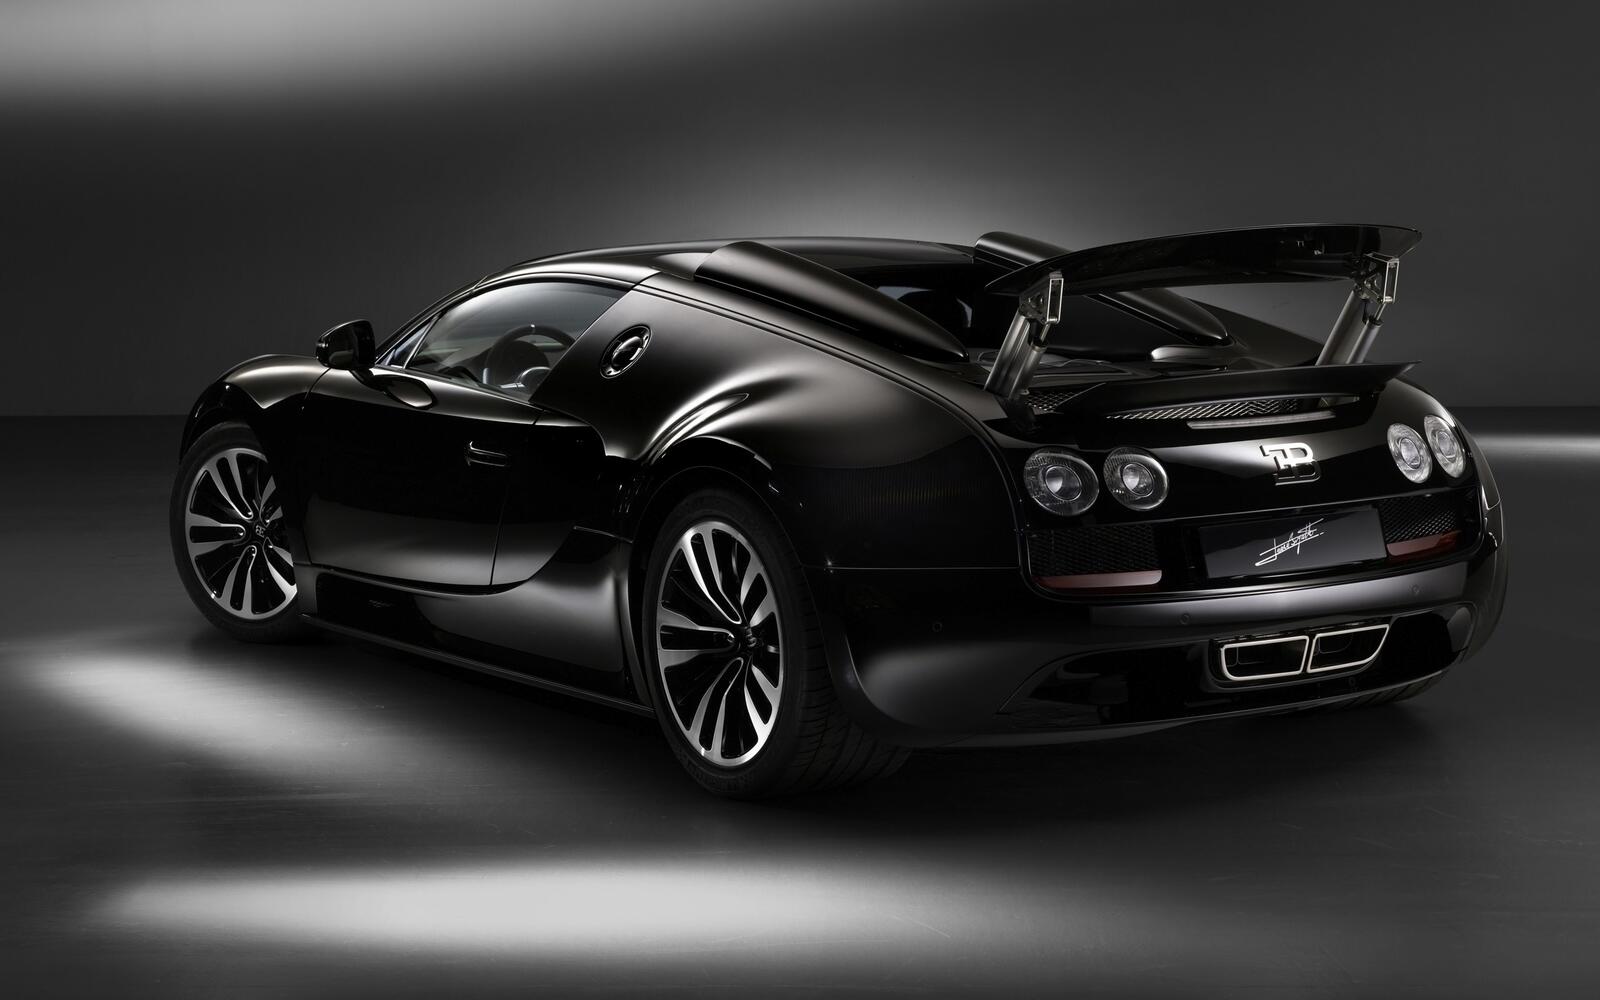 Бесплатное фото Bugatti Veyron вид сзади